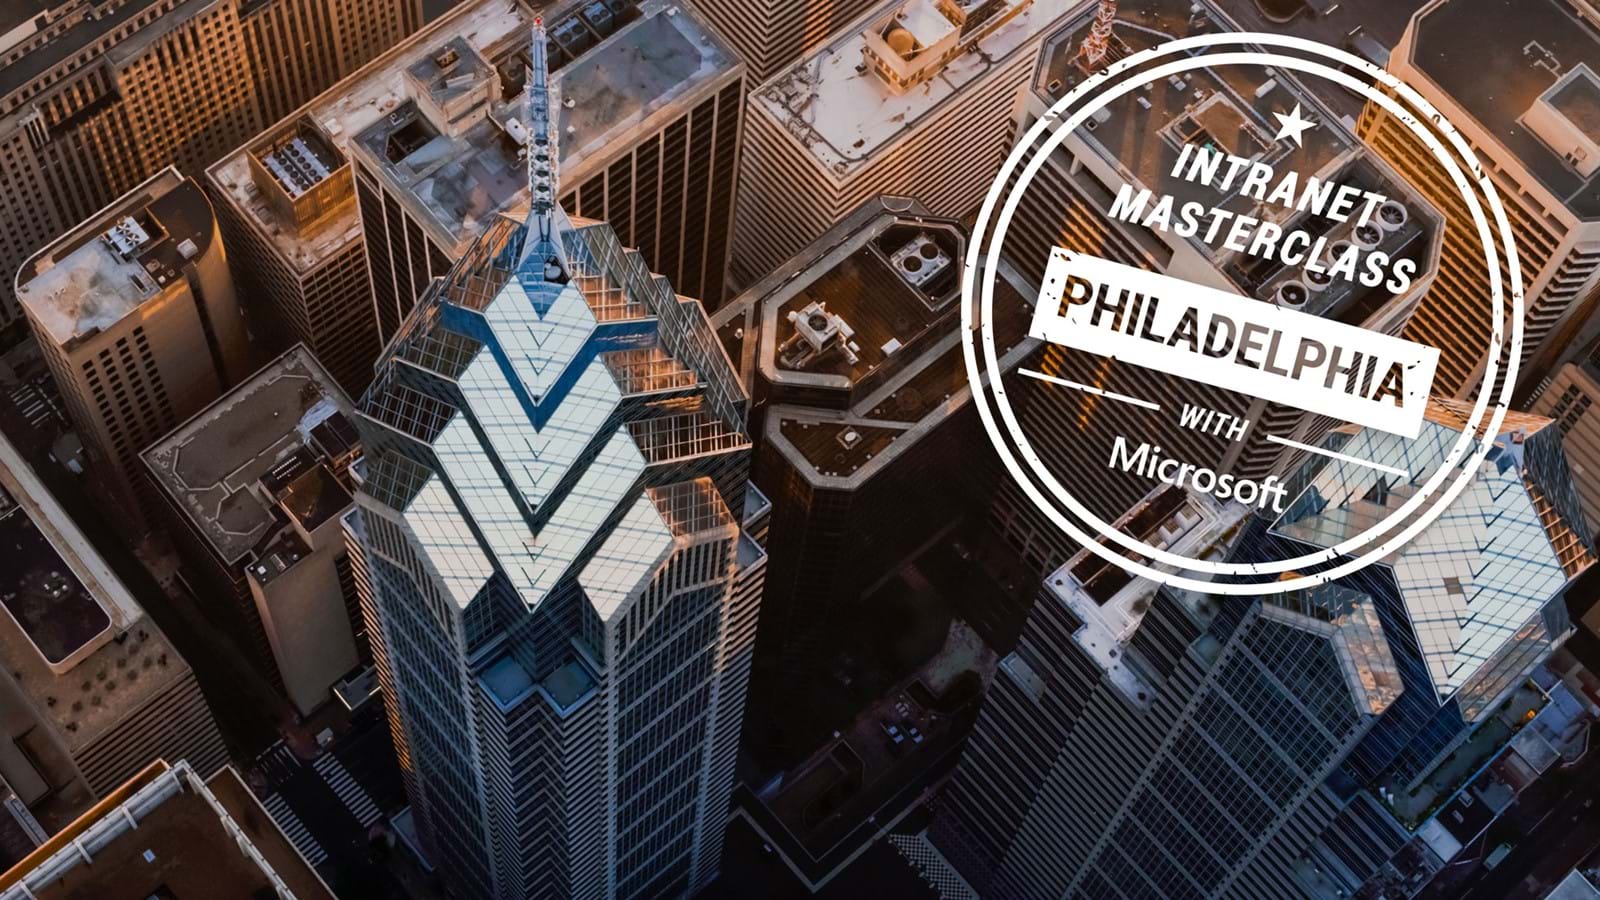 Unily's FREE Virtual Intranet Masterclass in Philadelphia, PA